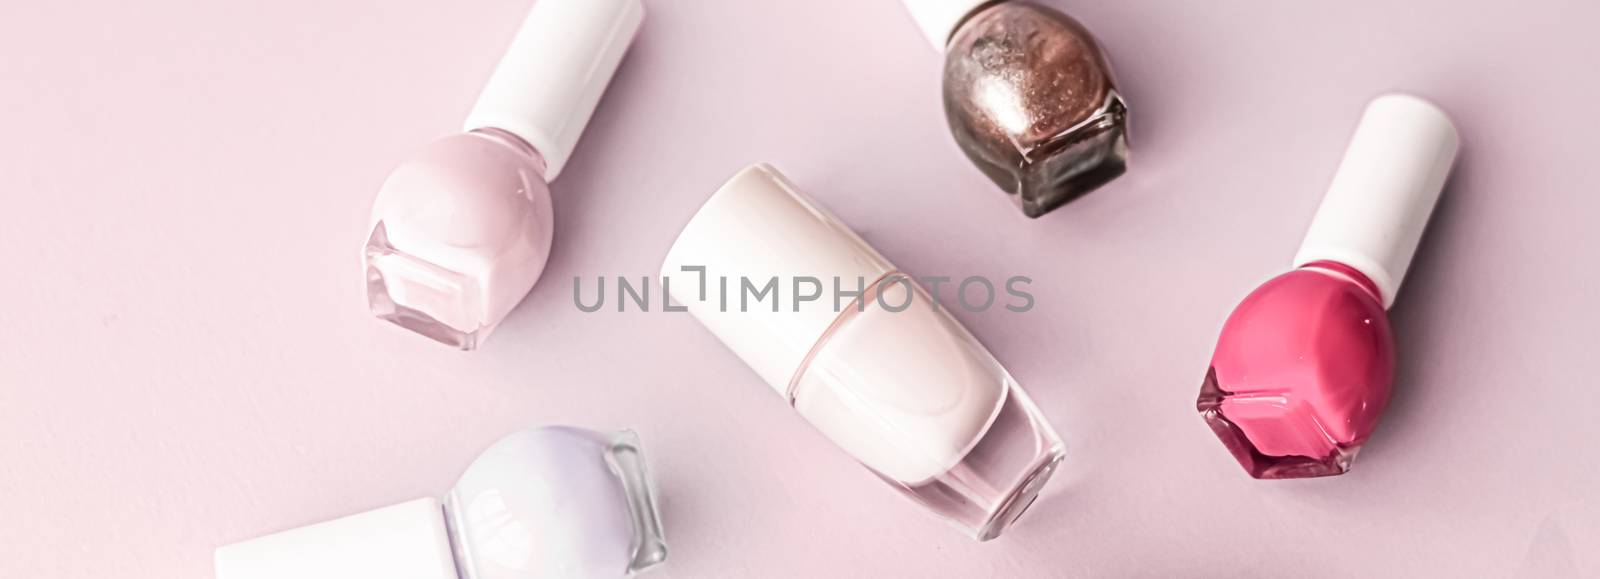 Nail polish bottles on blush pink background, beauty branding